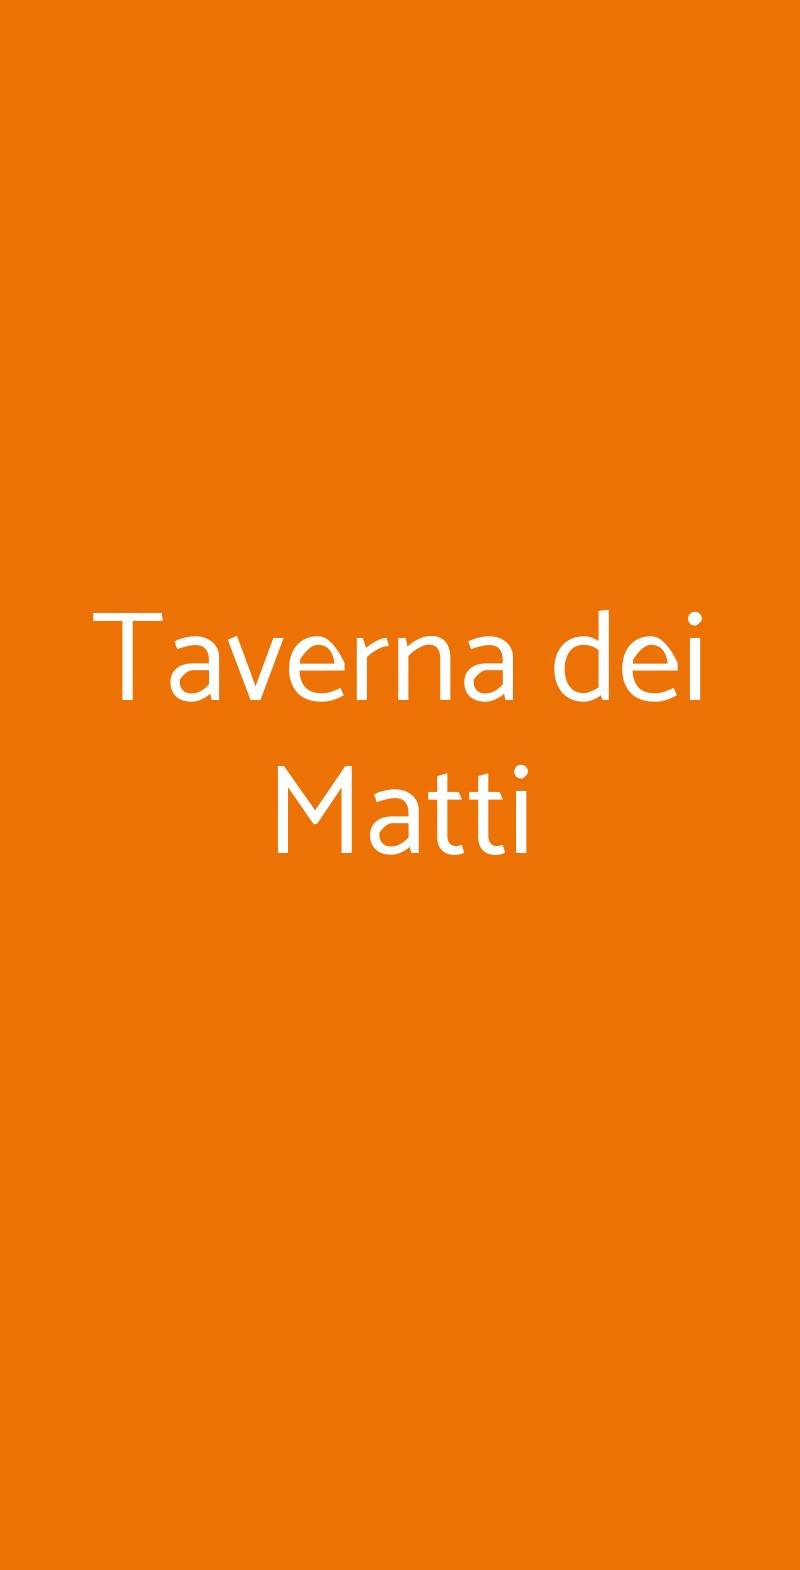 Taverna dei Matti Firenze menù 1 pagina